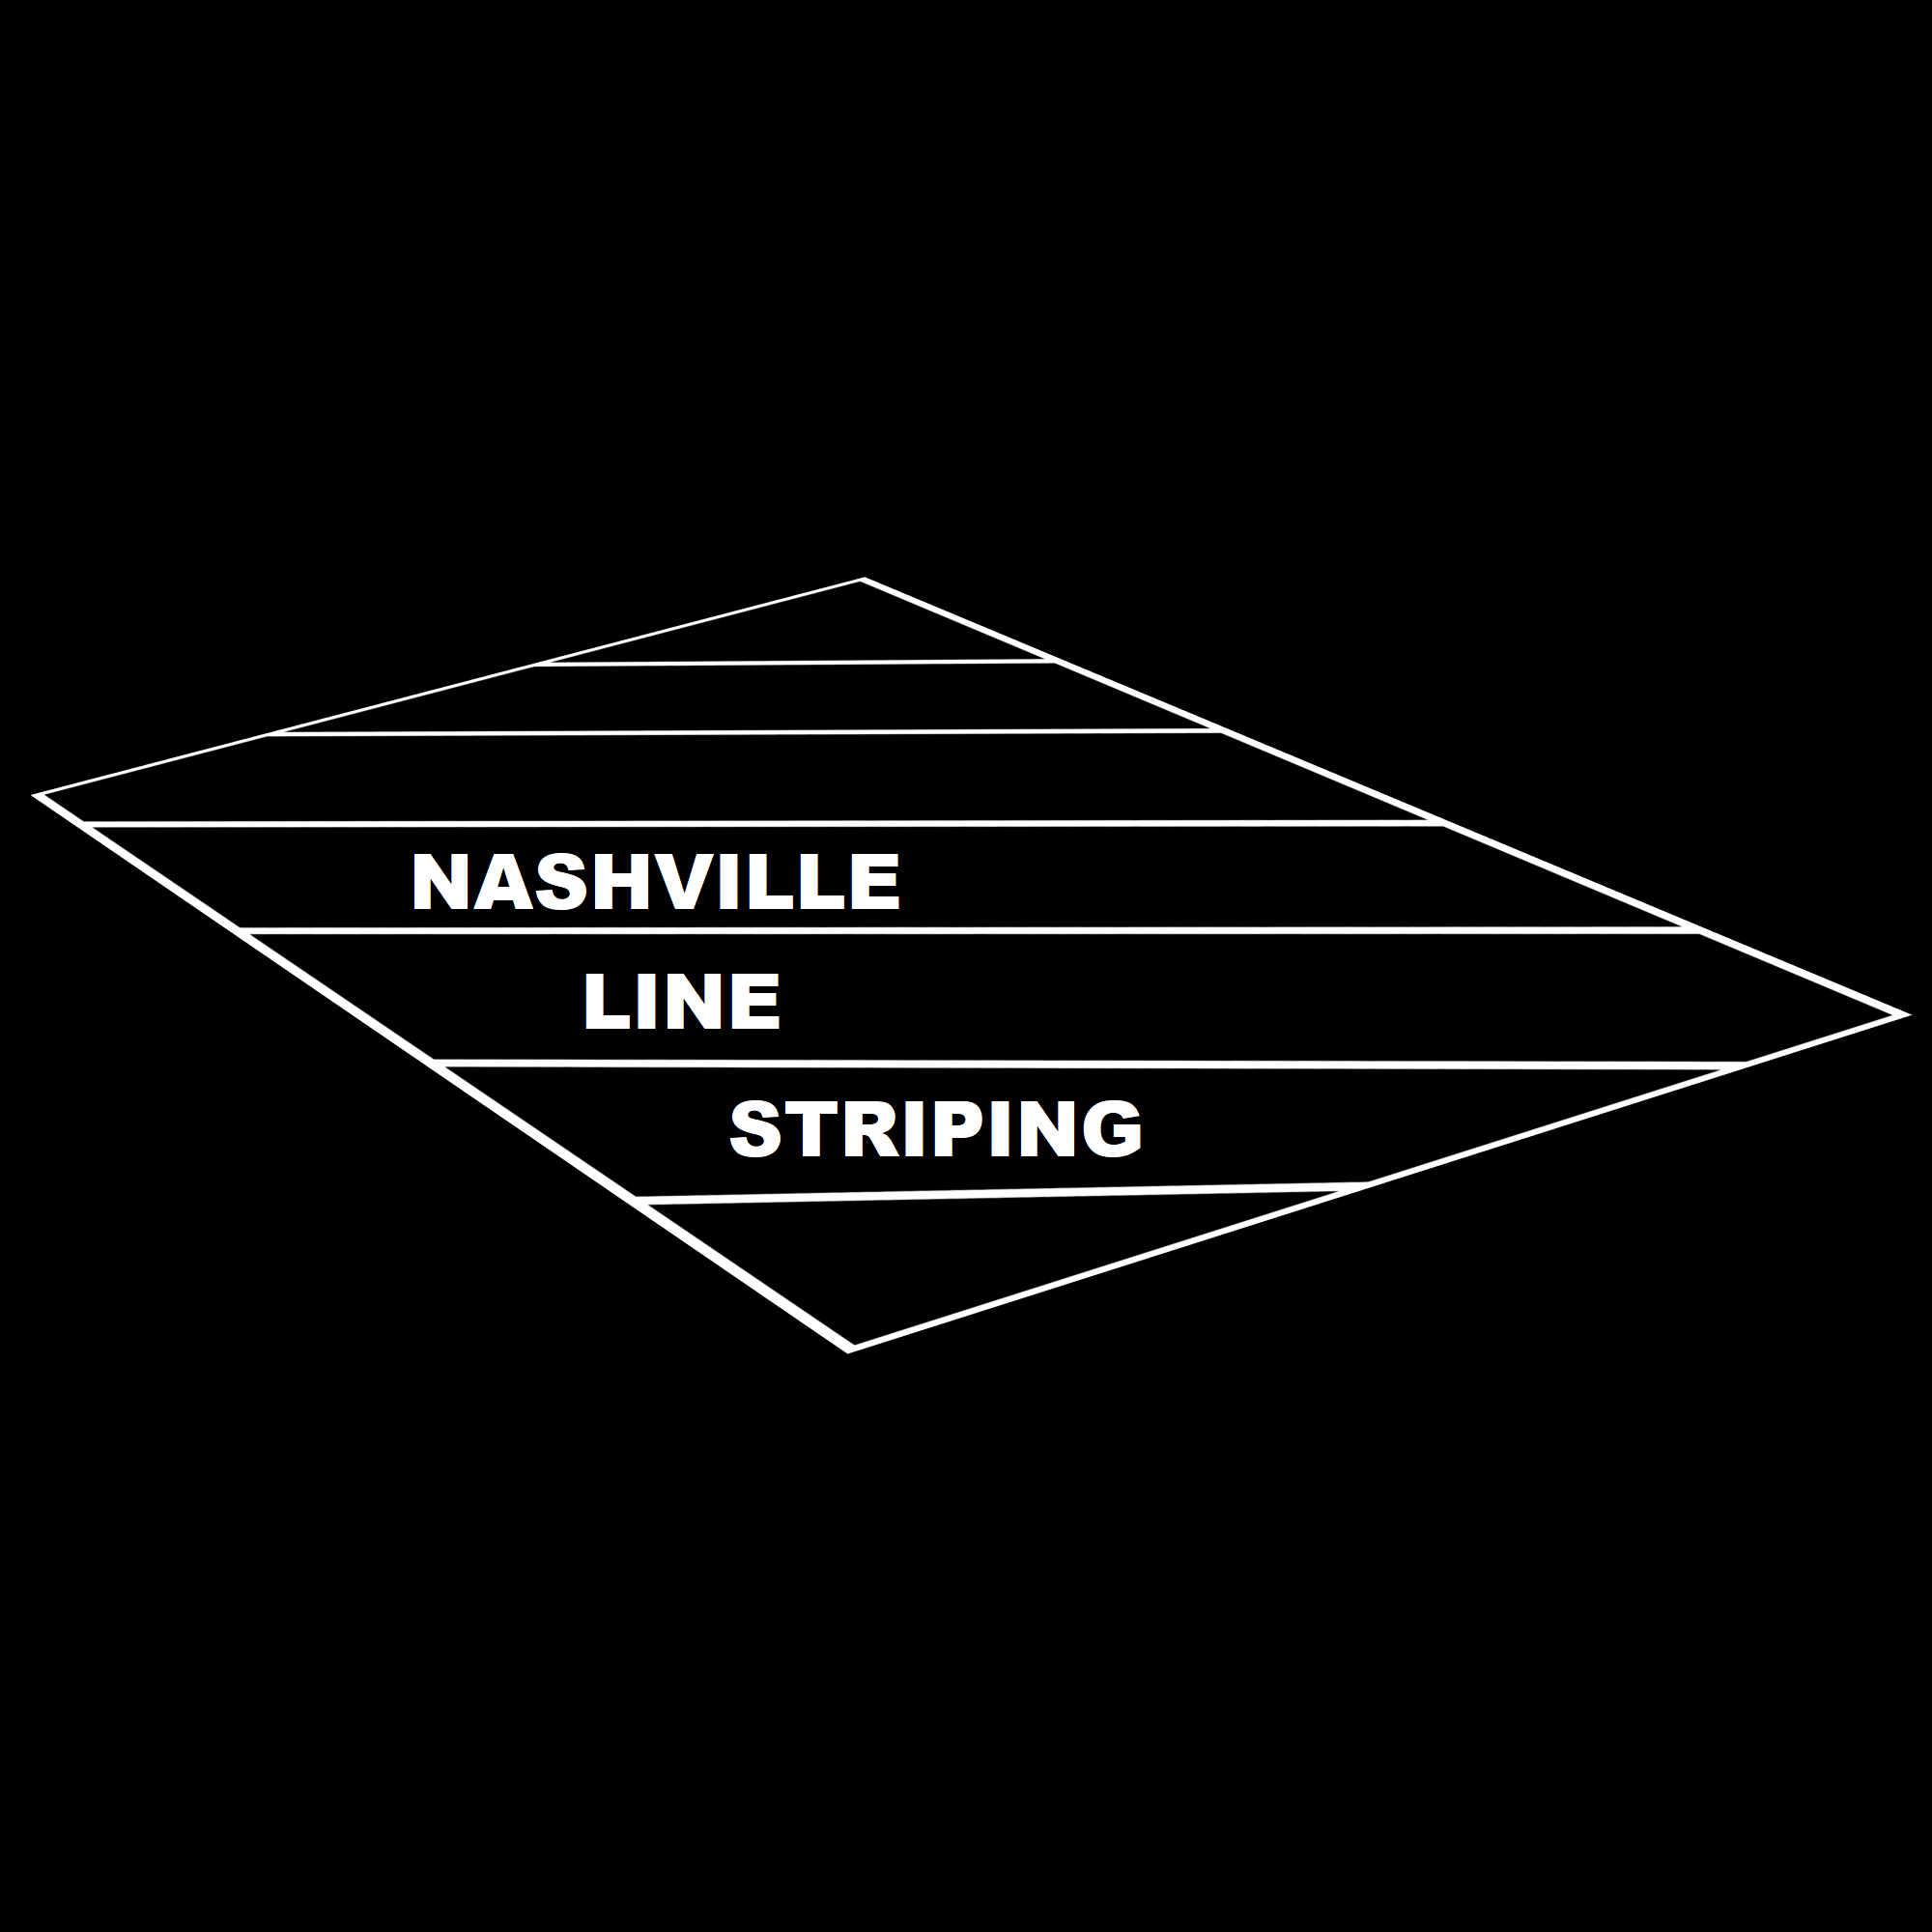 Nashville Line Striping